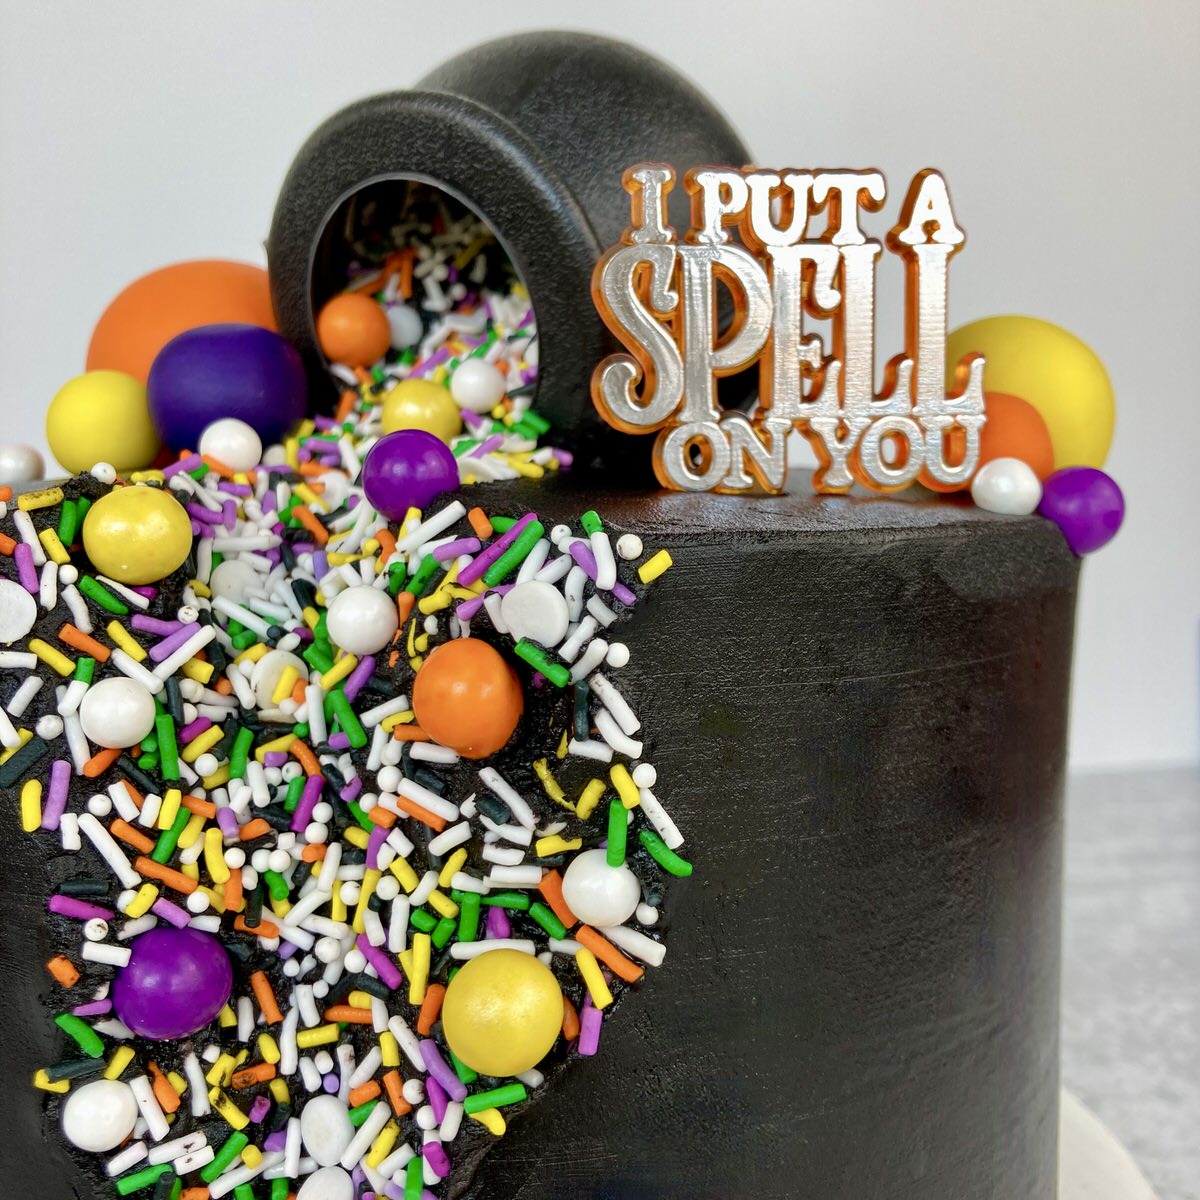 Hocus Pocus® Halloween Cake Decorating Experience!